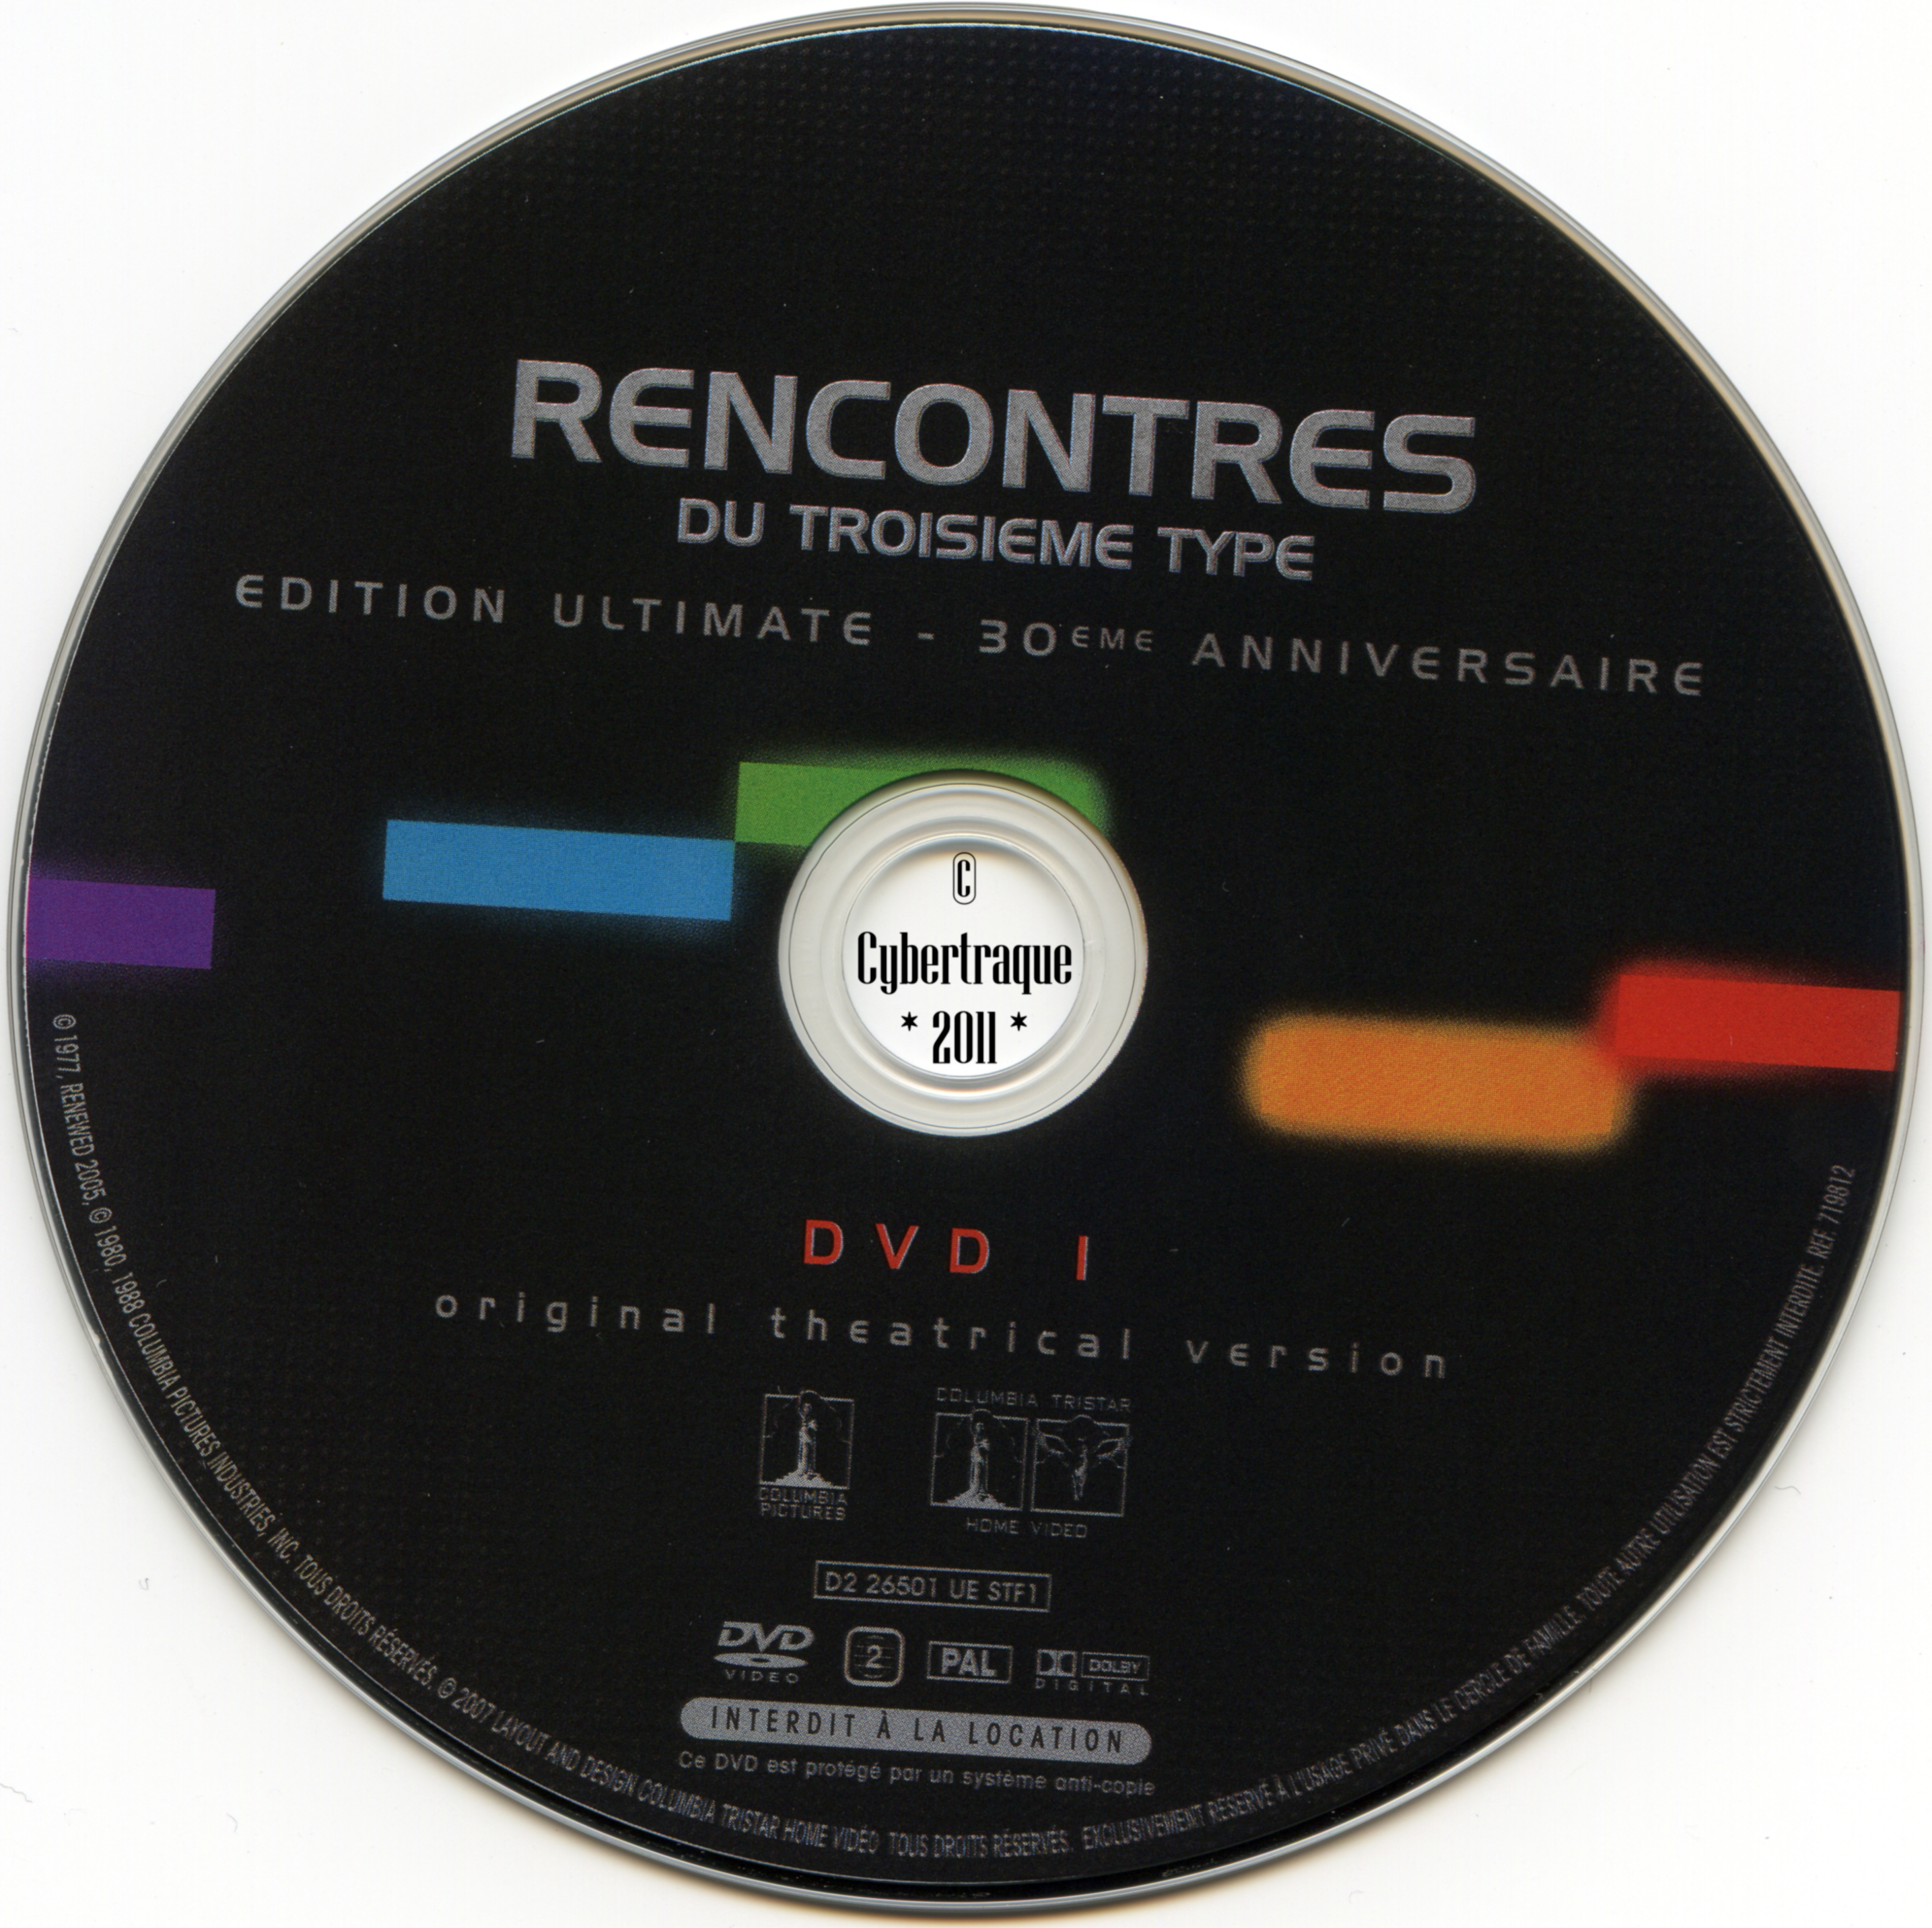 Rencontres du troisieme type Ultimate Edition DISC 1